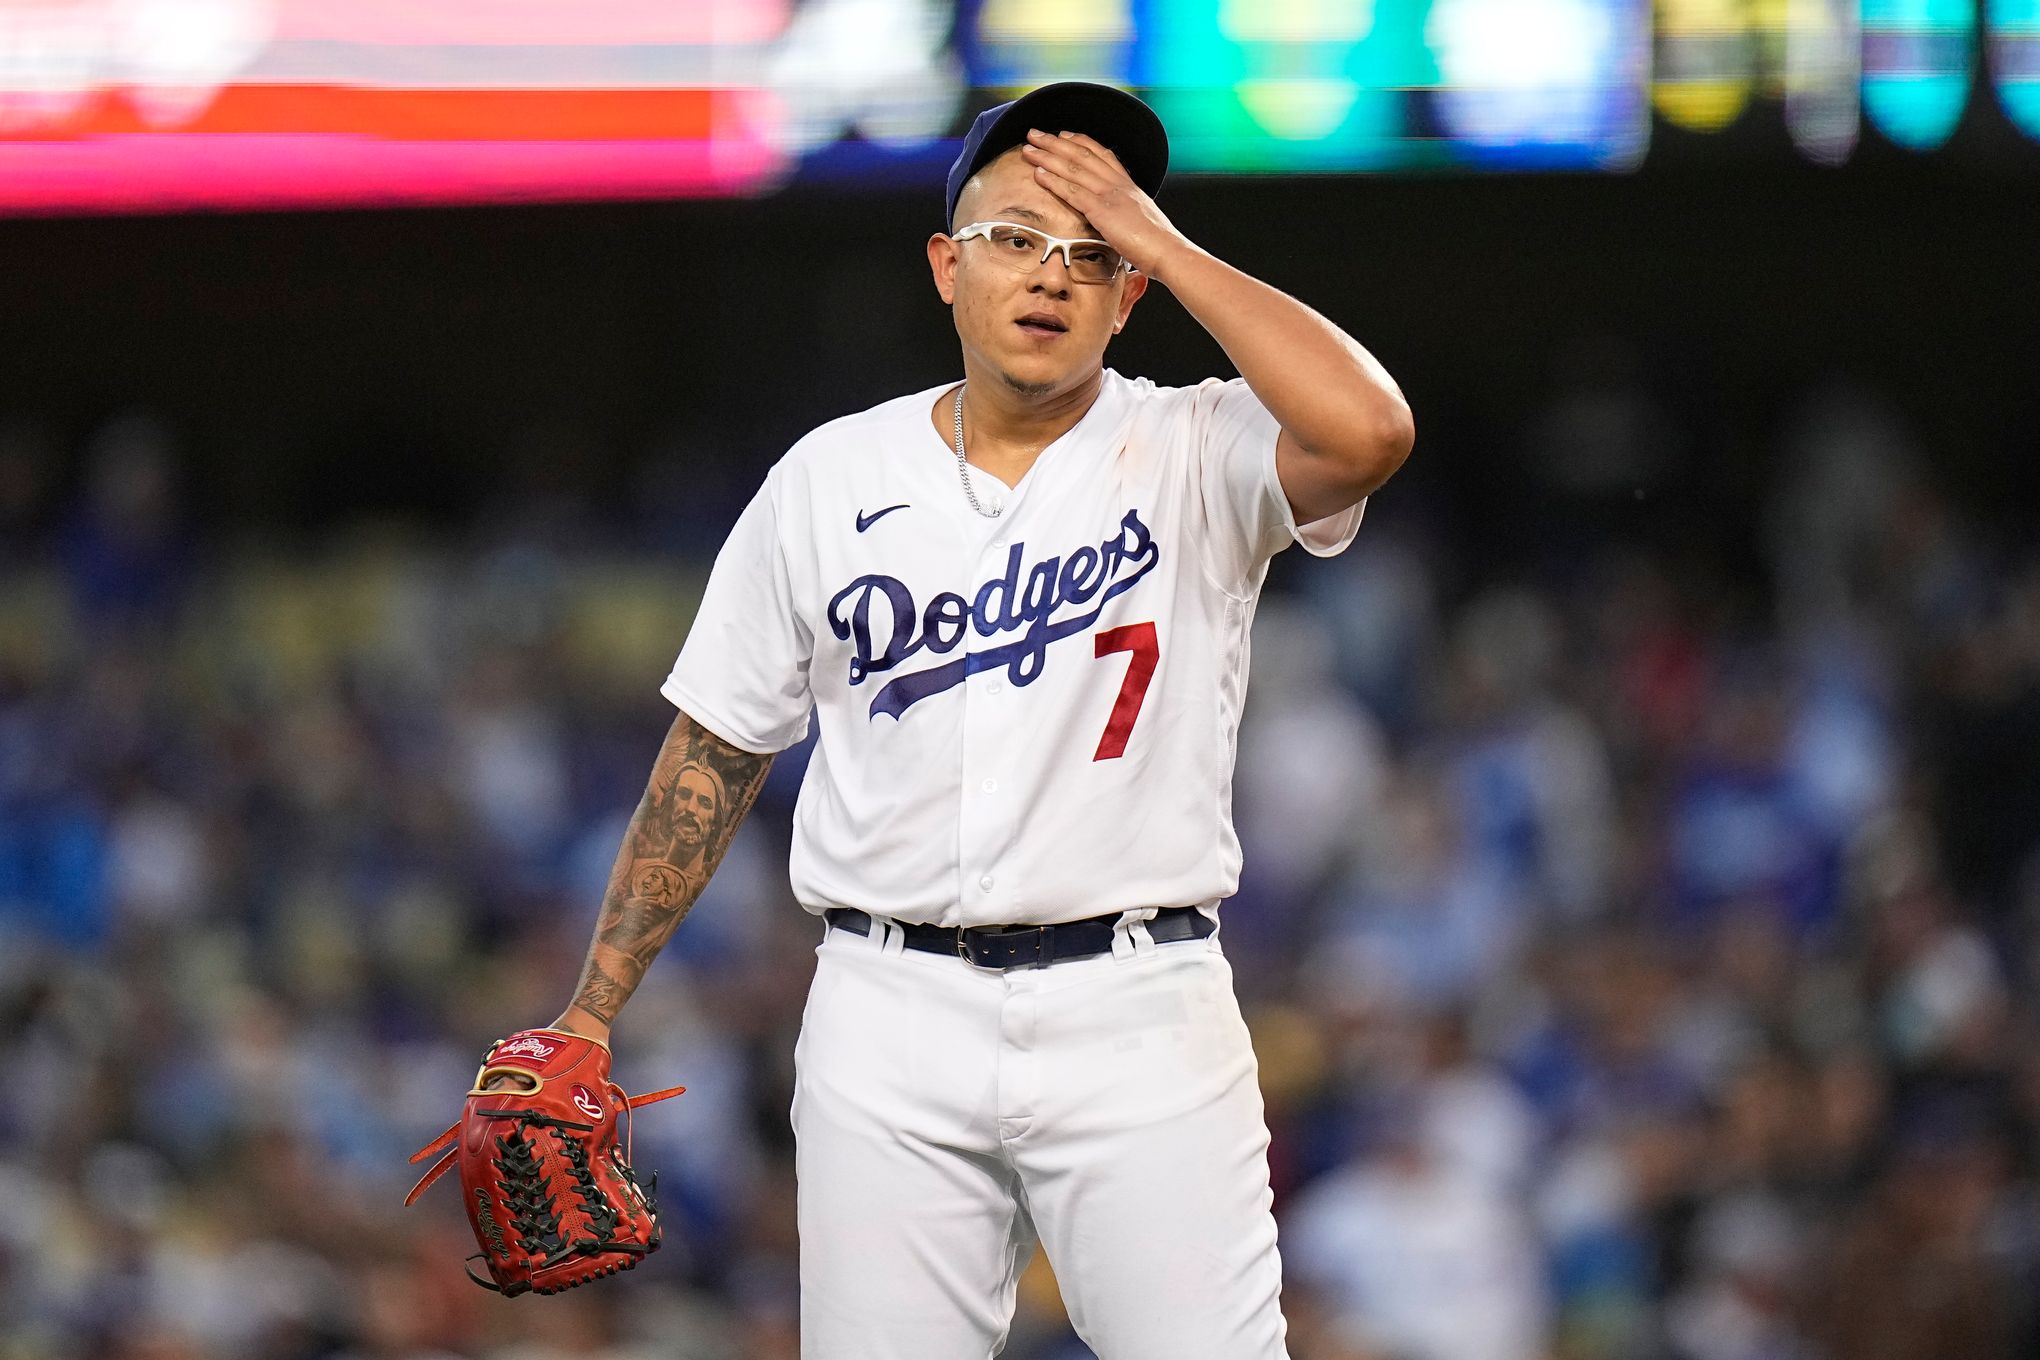 World Series Daily -- Will Julio Urias, Dodgers push Rays to brink